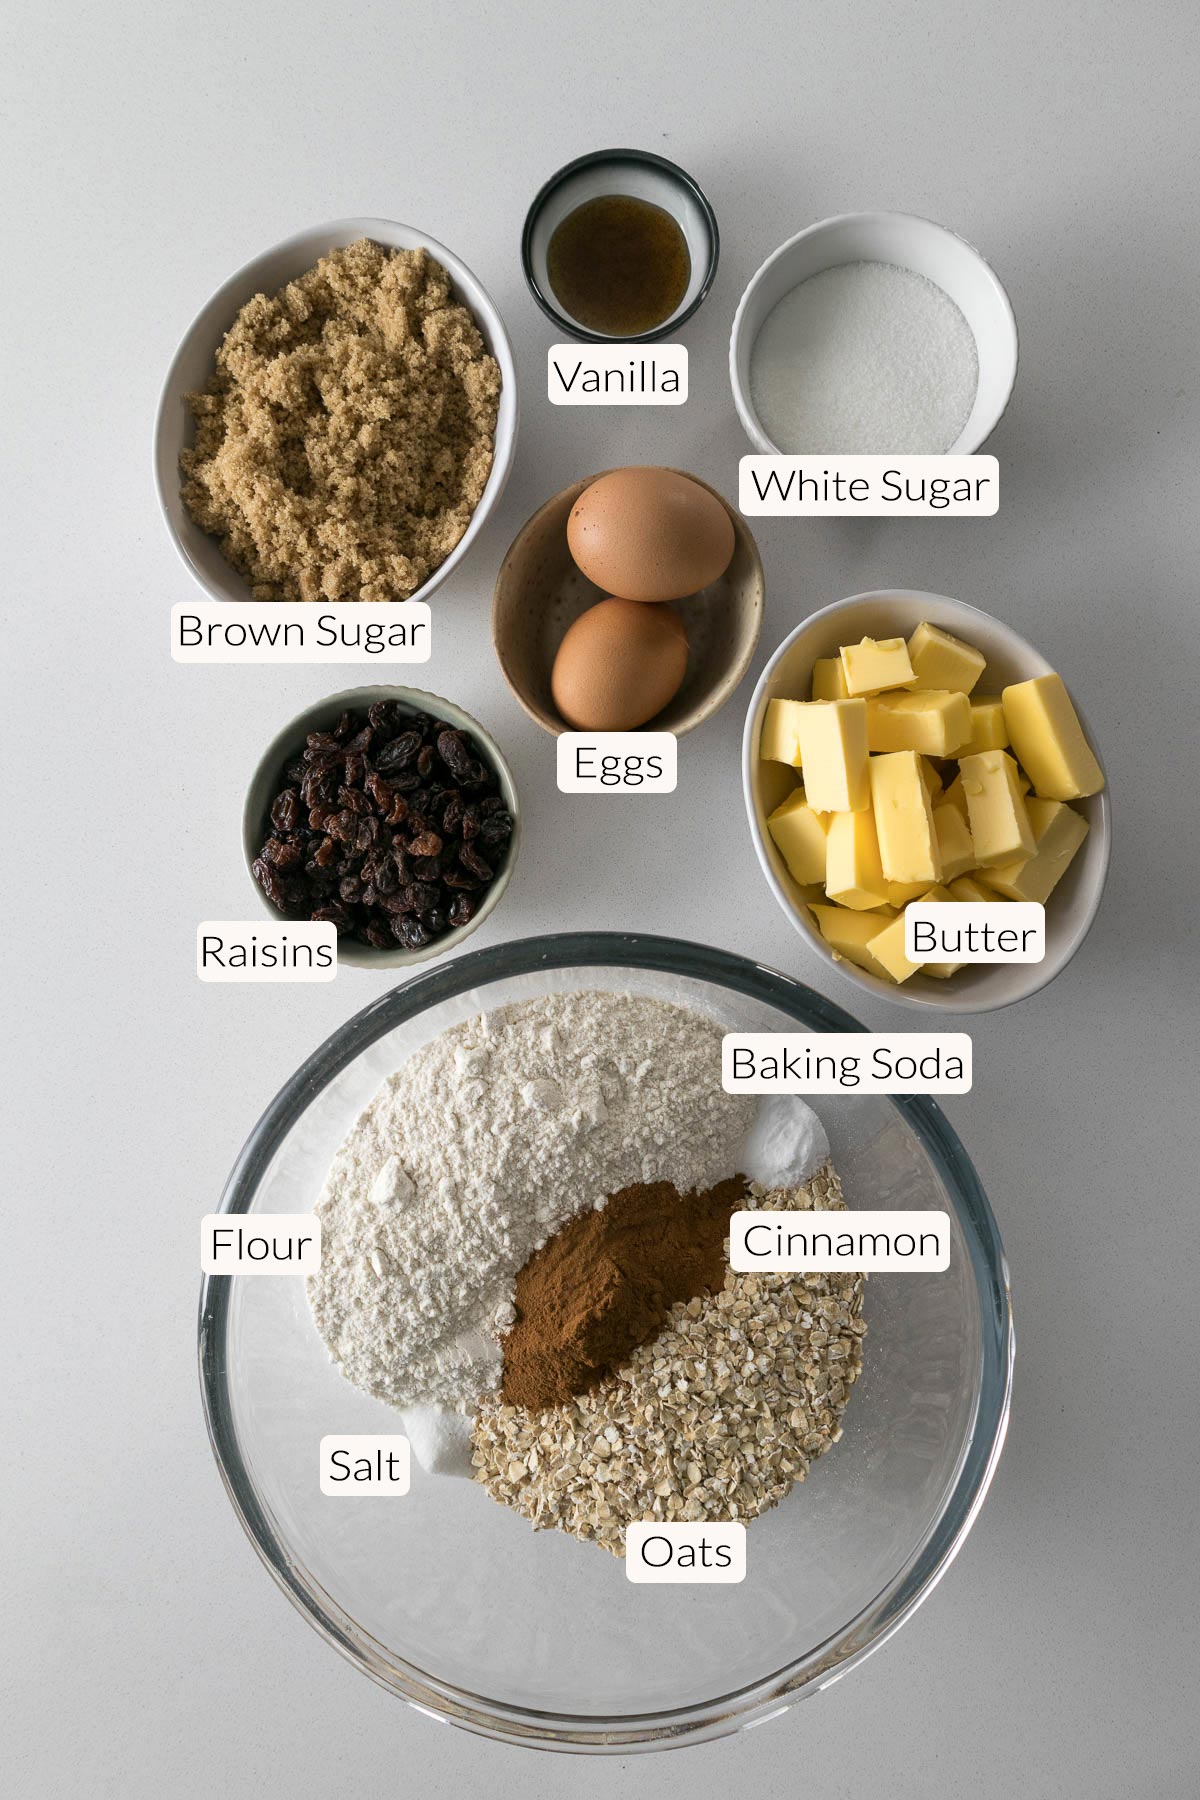 Ingredients - oats, salt, cinnamon, flour, baking soda, butter, raisins, eggs, sugar, and vanilla.